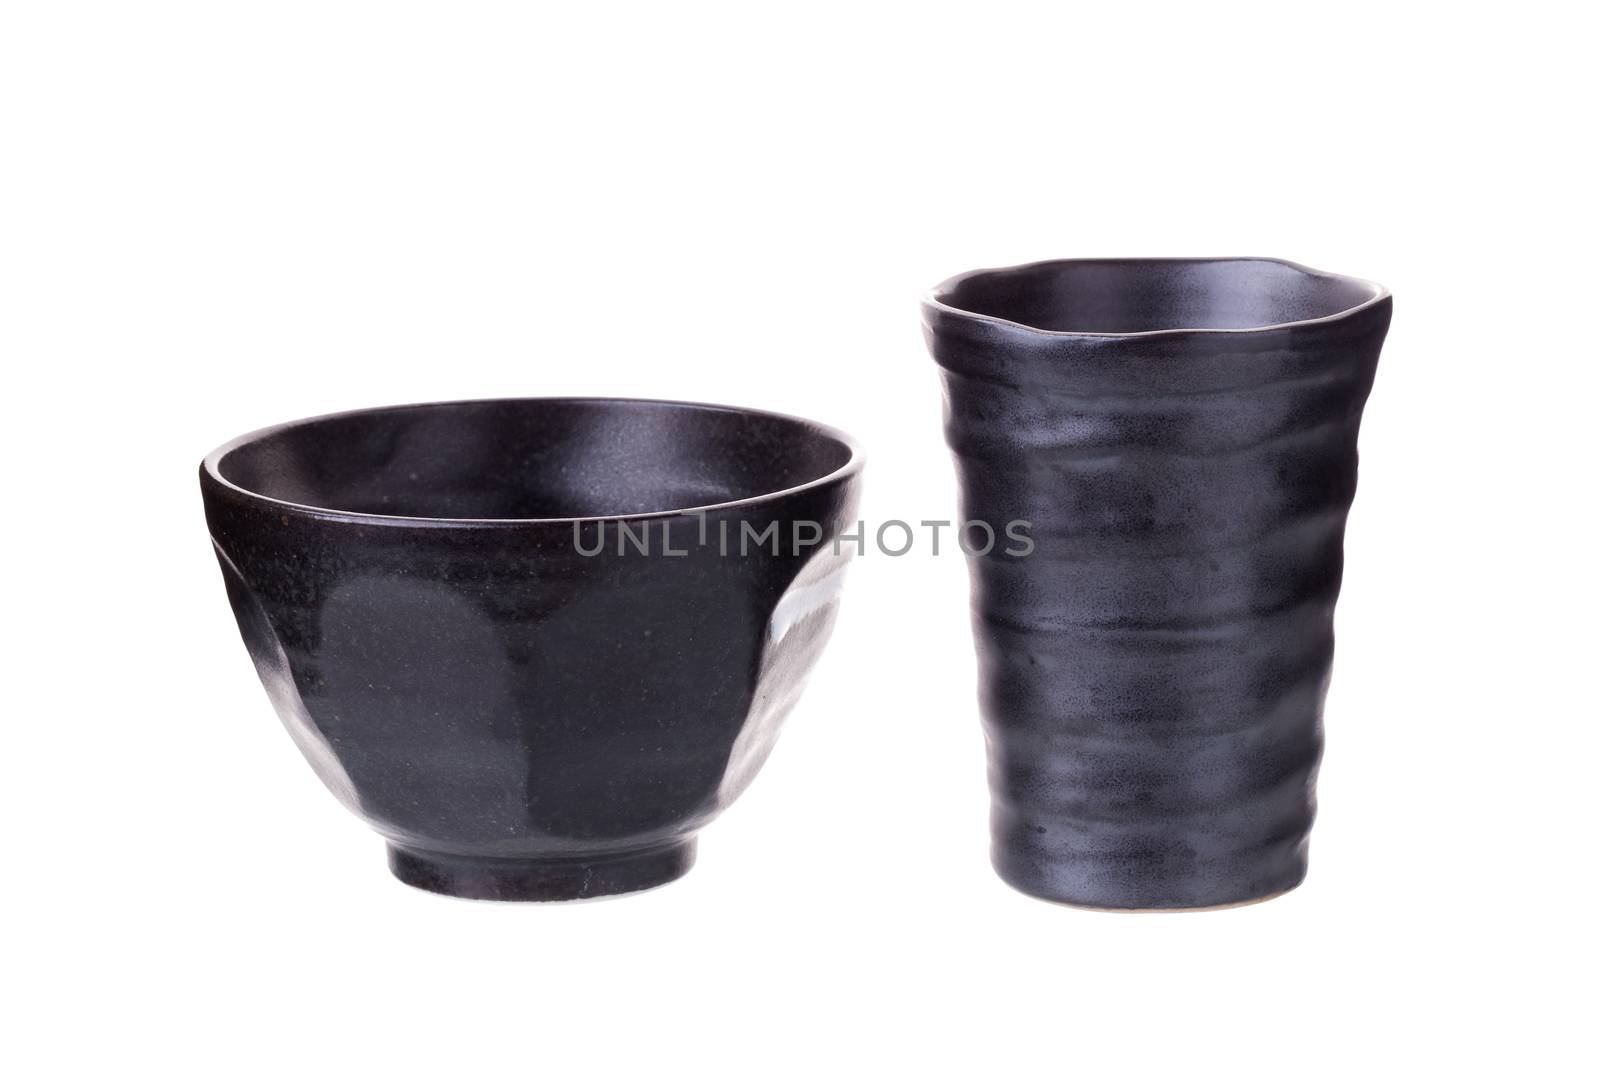 Glass ceramic black and black ceramic bowl on a white background